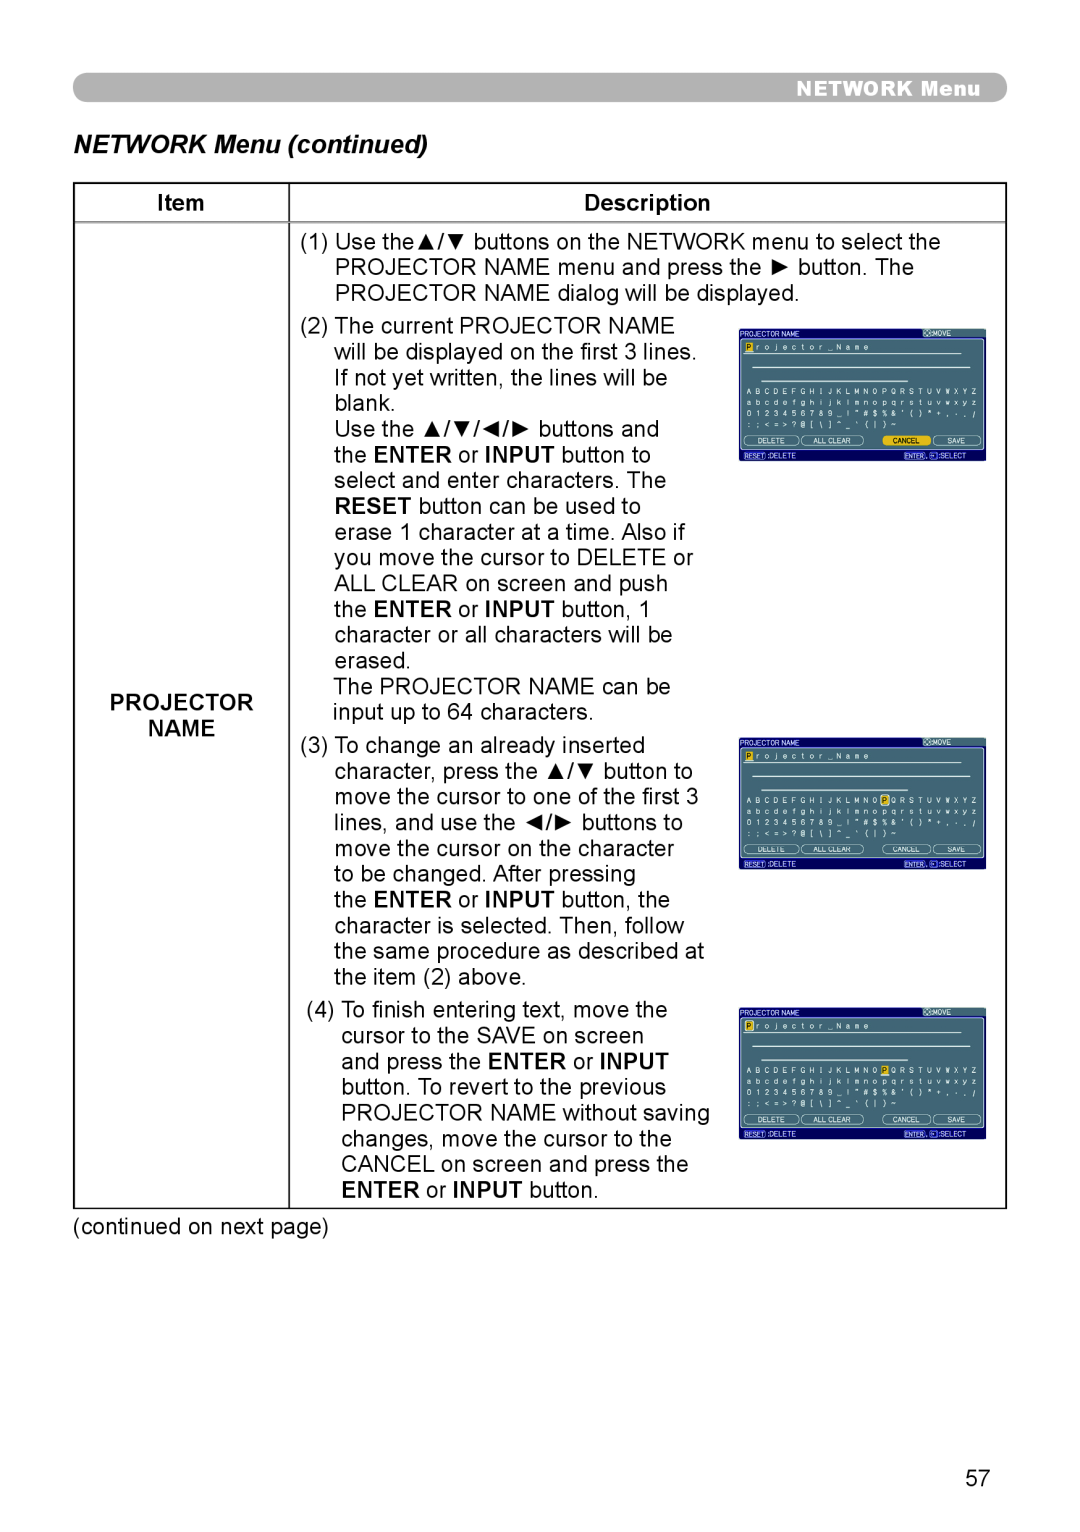 Planar PR9020 user manual NETWORK Menu continued, Description, Projector, Name, ENTER or INPUT button 